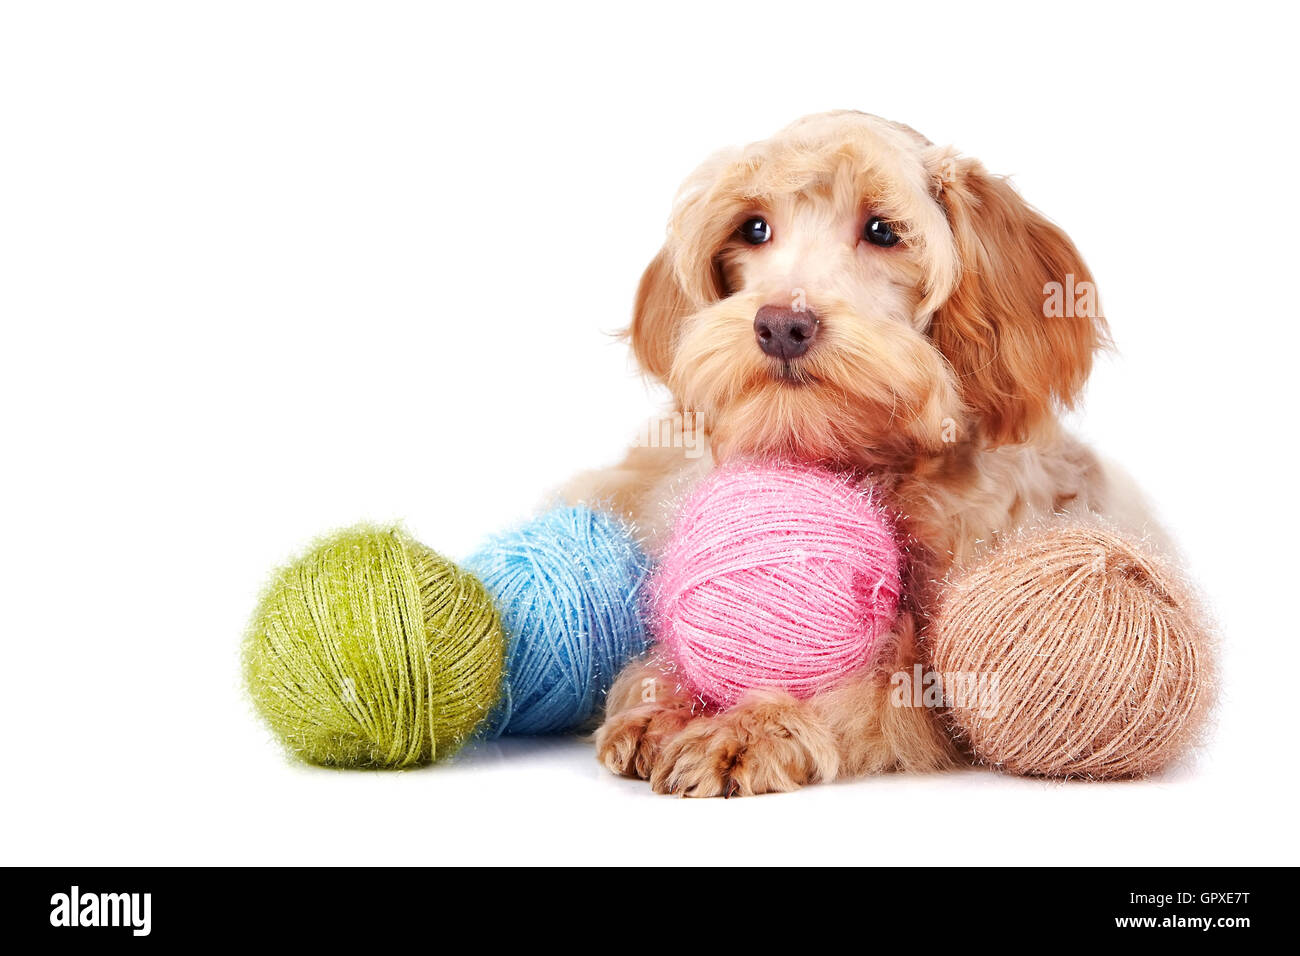 Decorative dog and woolen balls Stock Photo